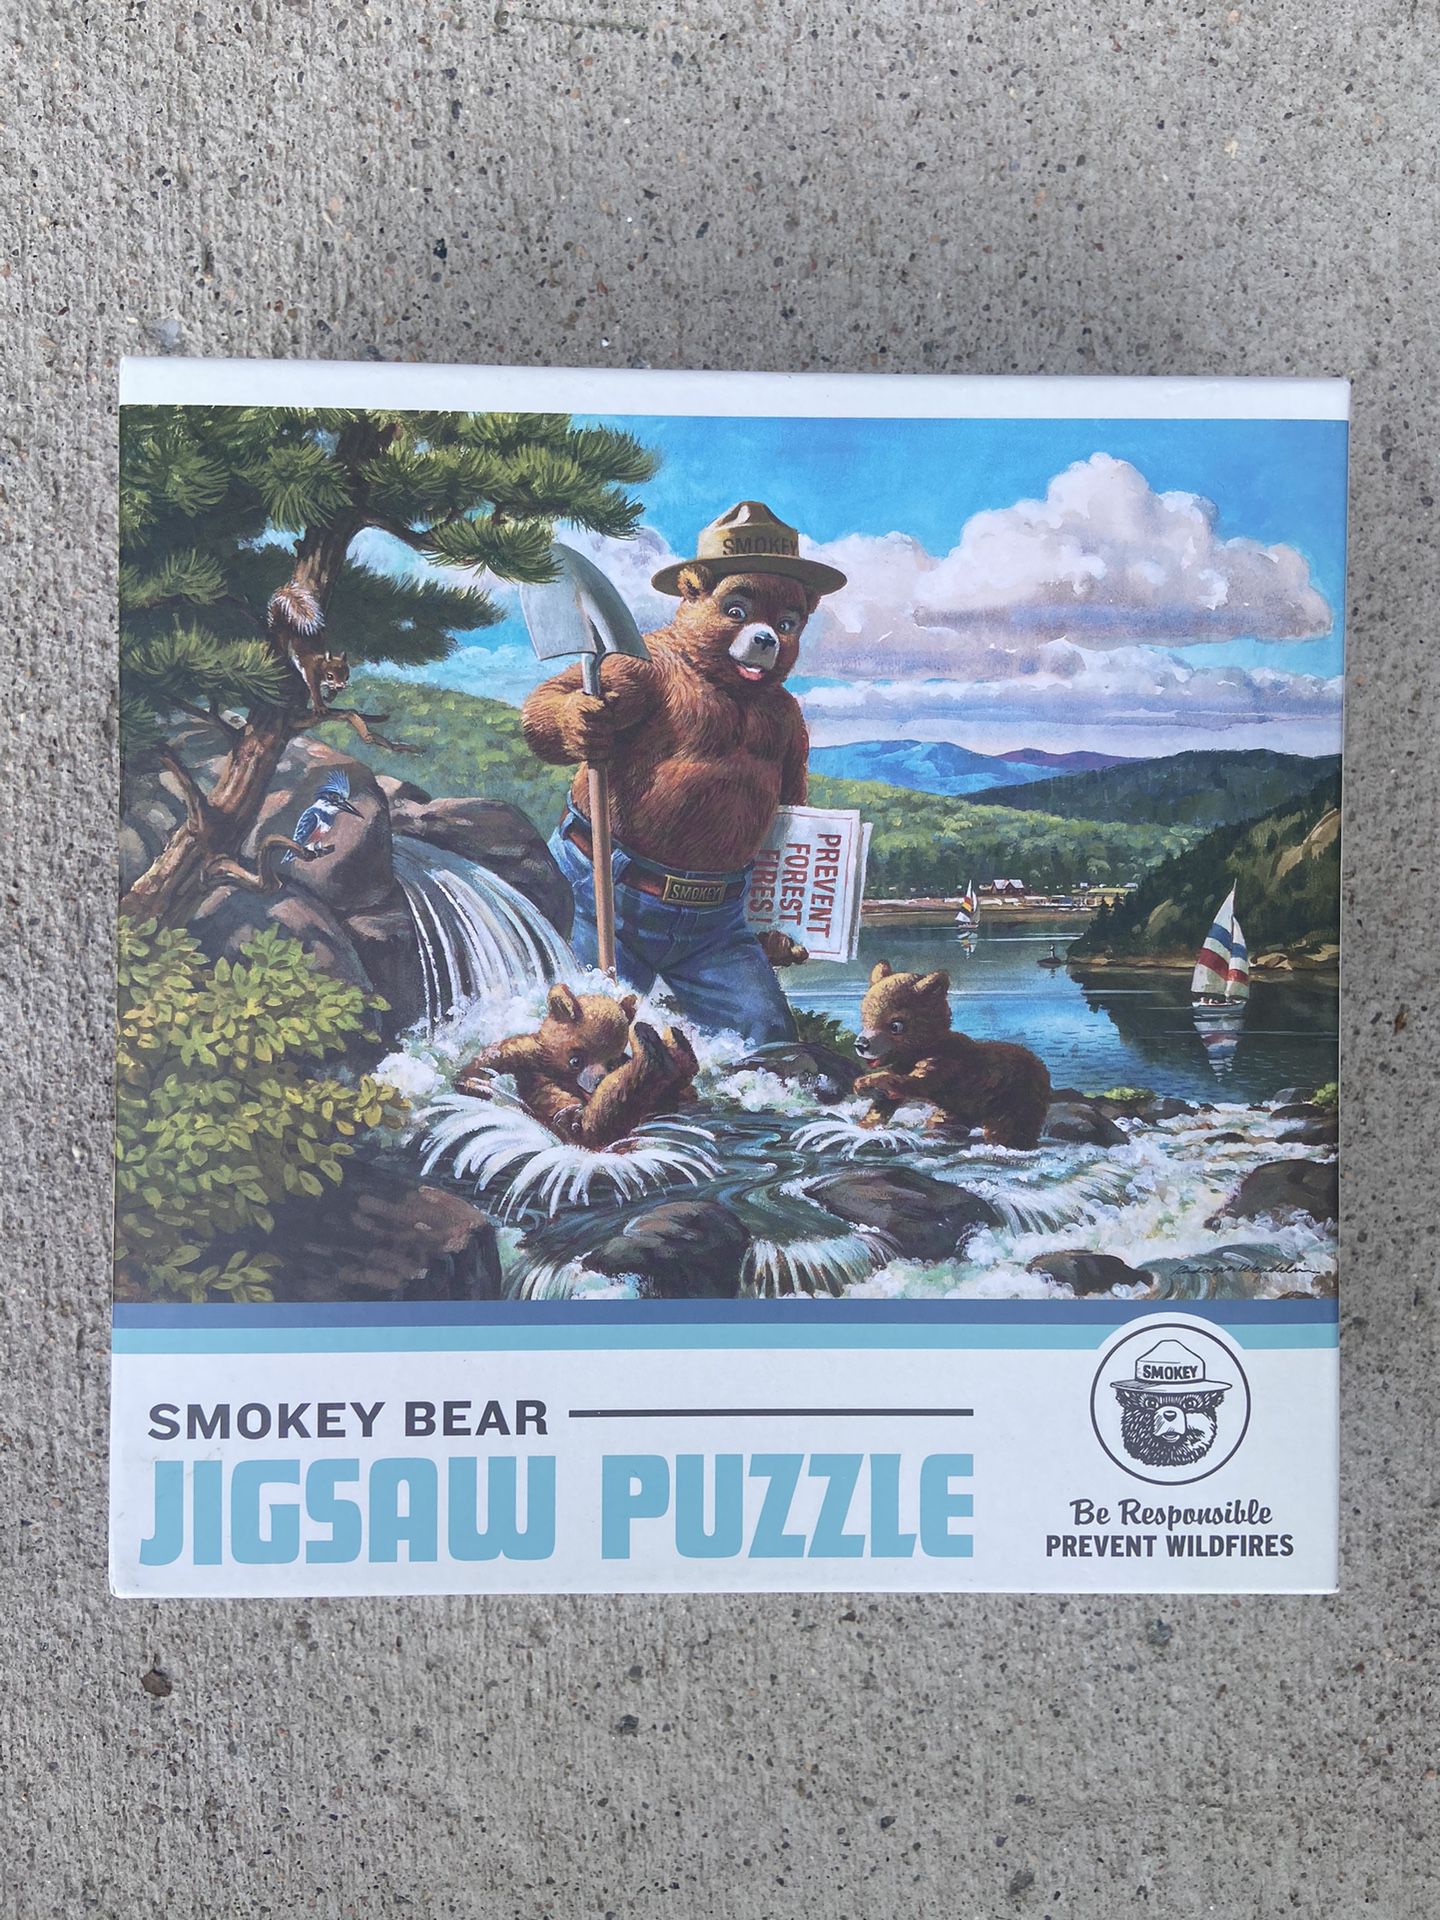 Smokey Bear Puzzle